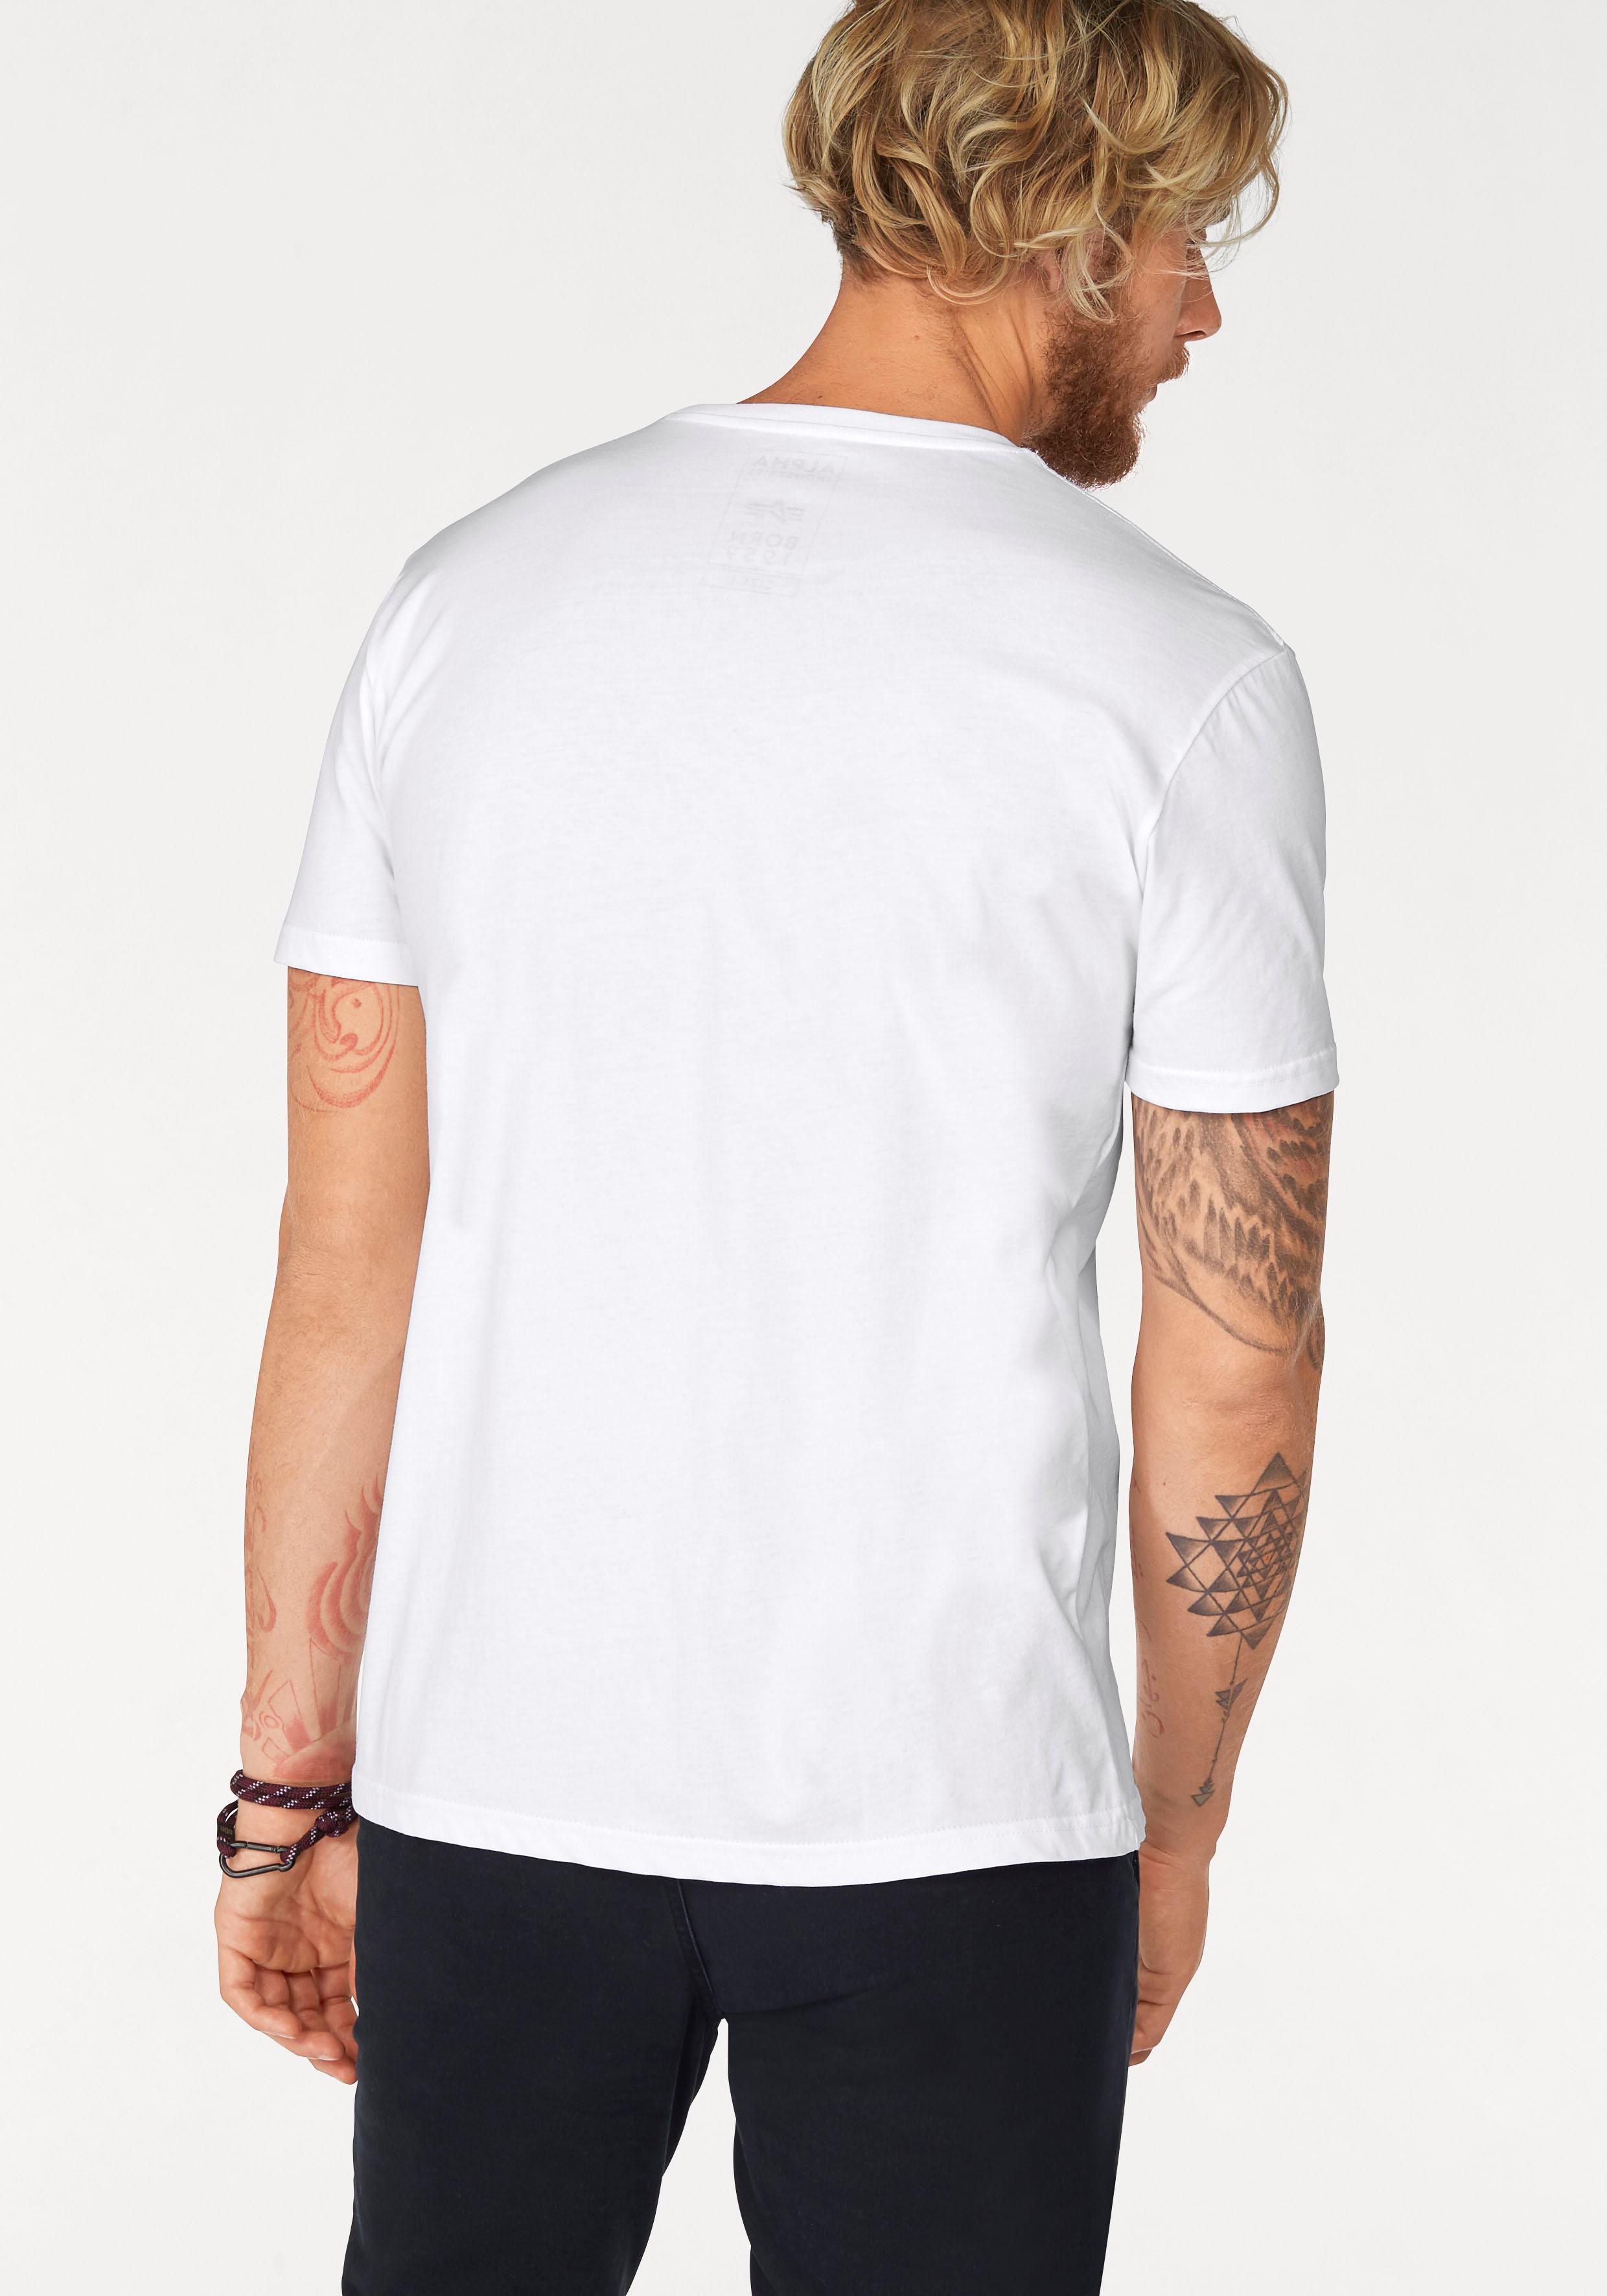 Alpha Industries T-Shirt Basic T-Shirt günstig online kaufen